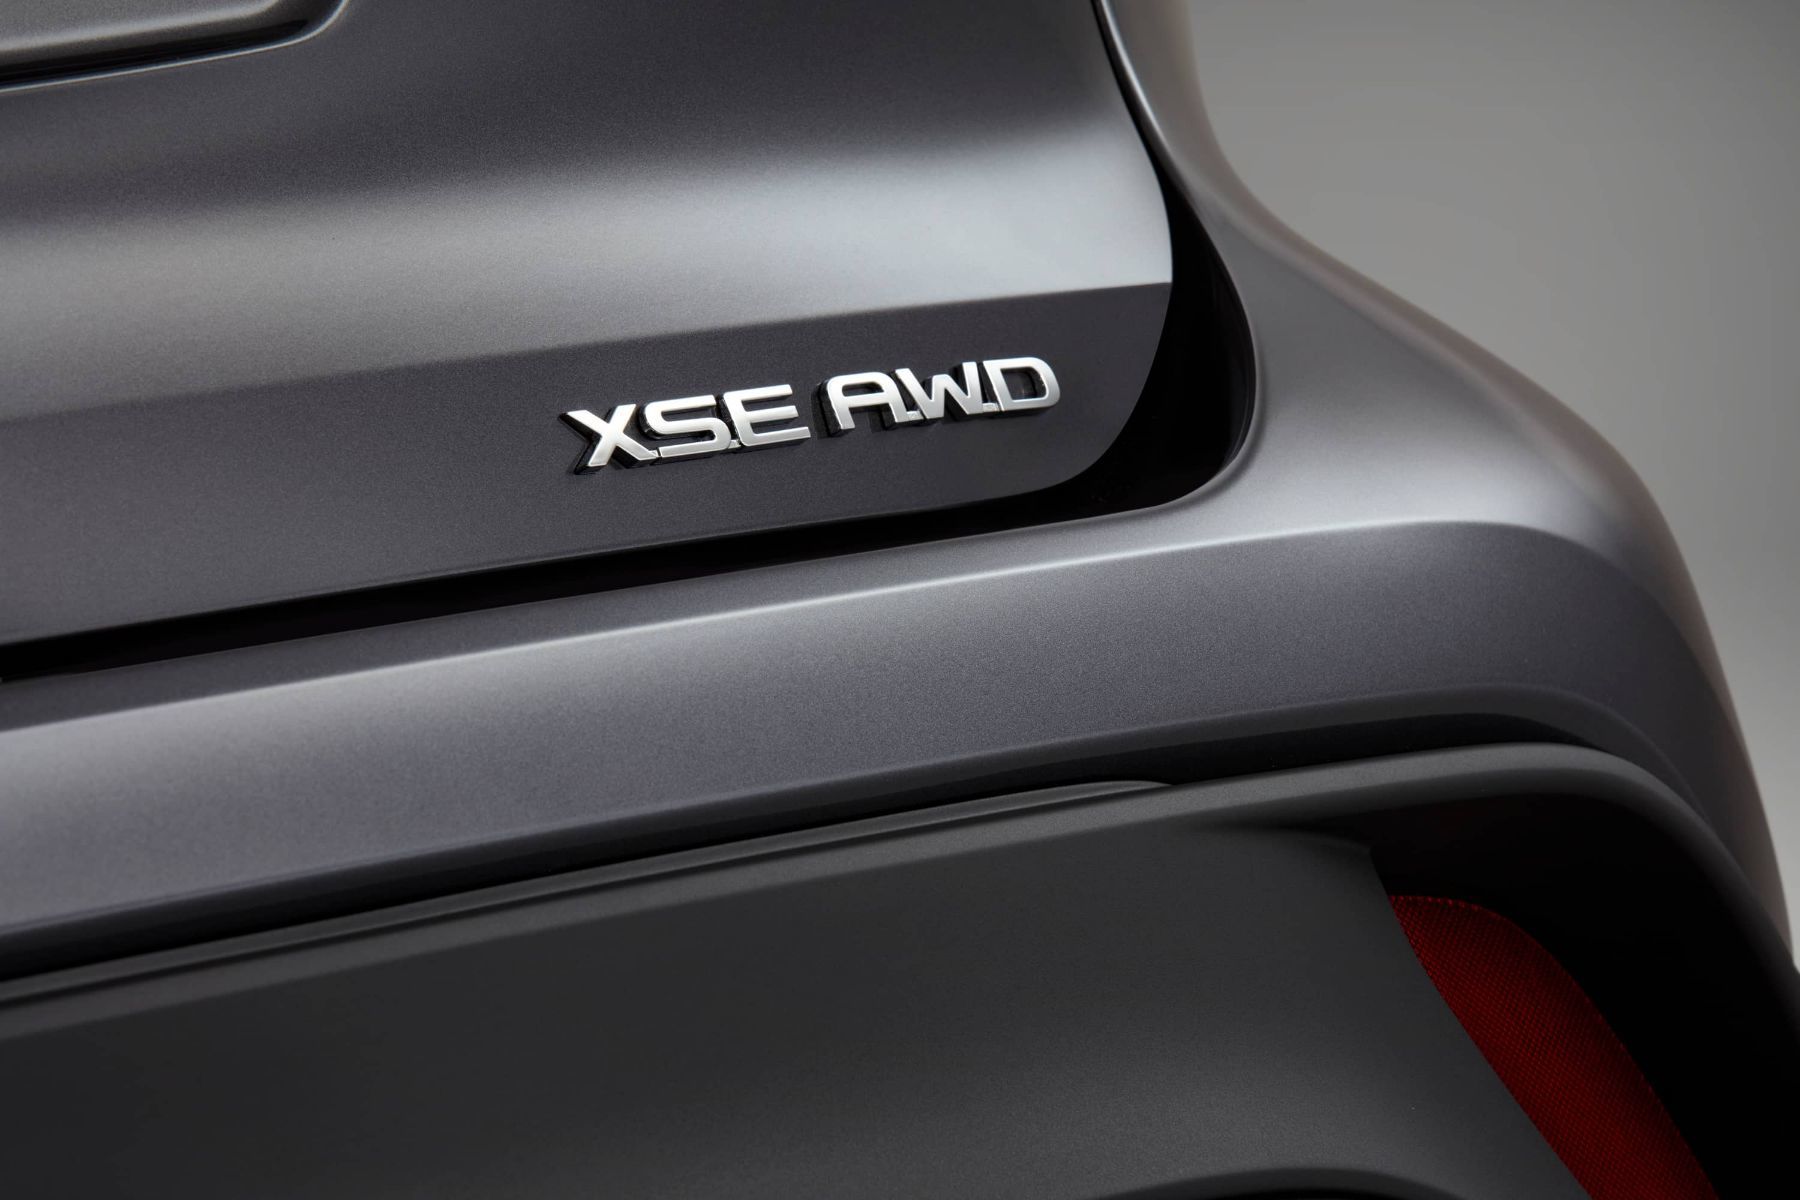 XSE AWD emblem of the 2021 Toyota Highlander